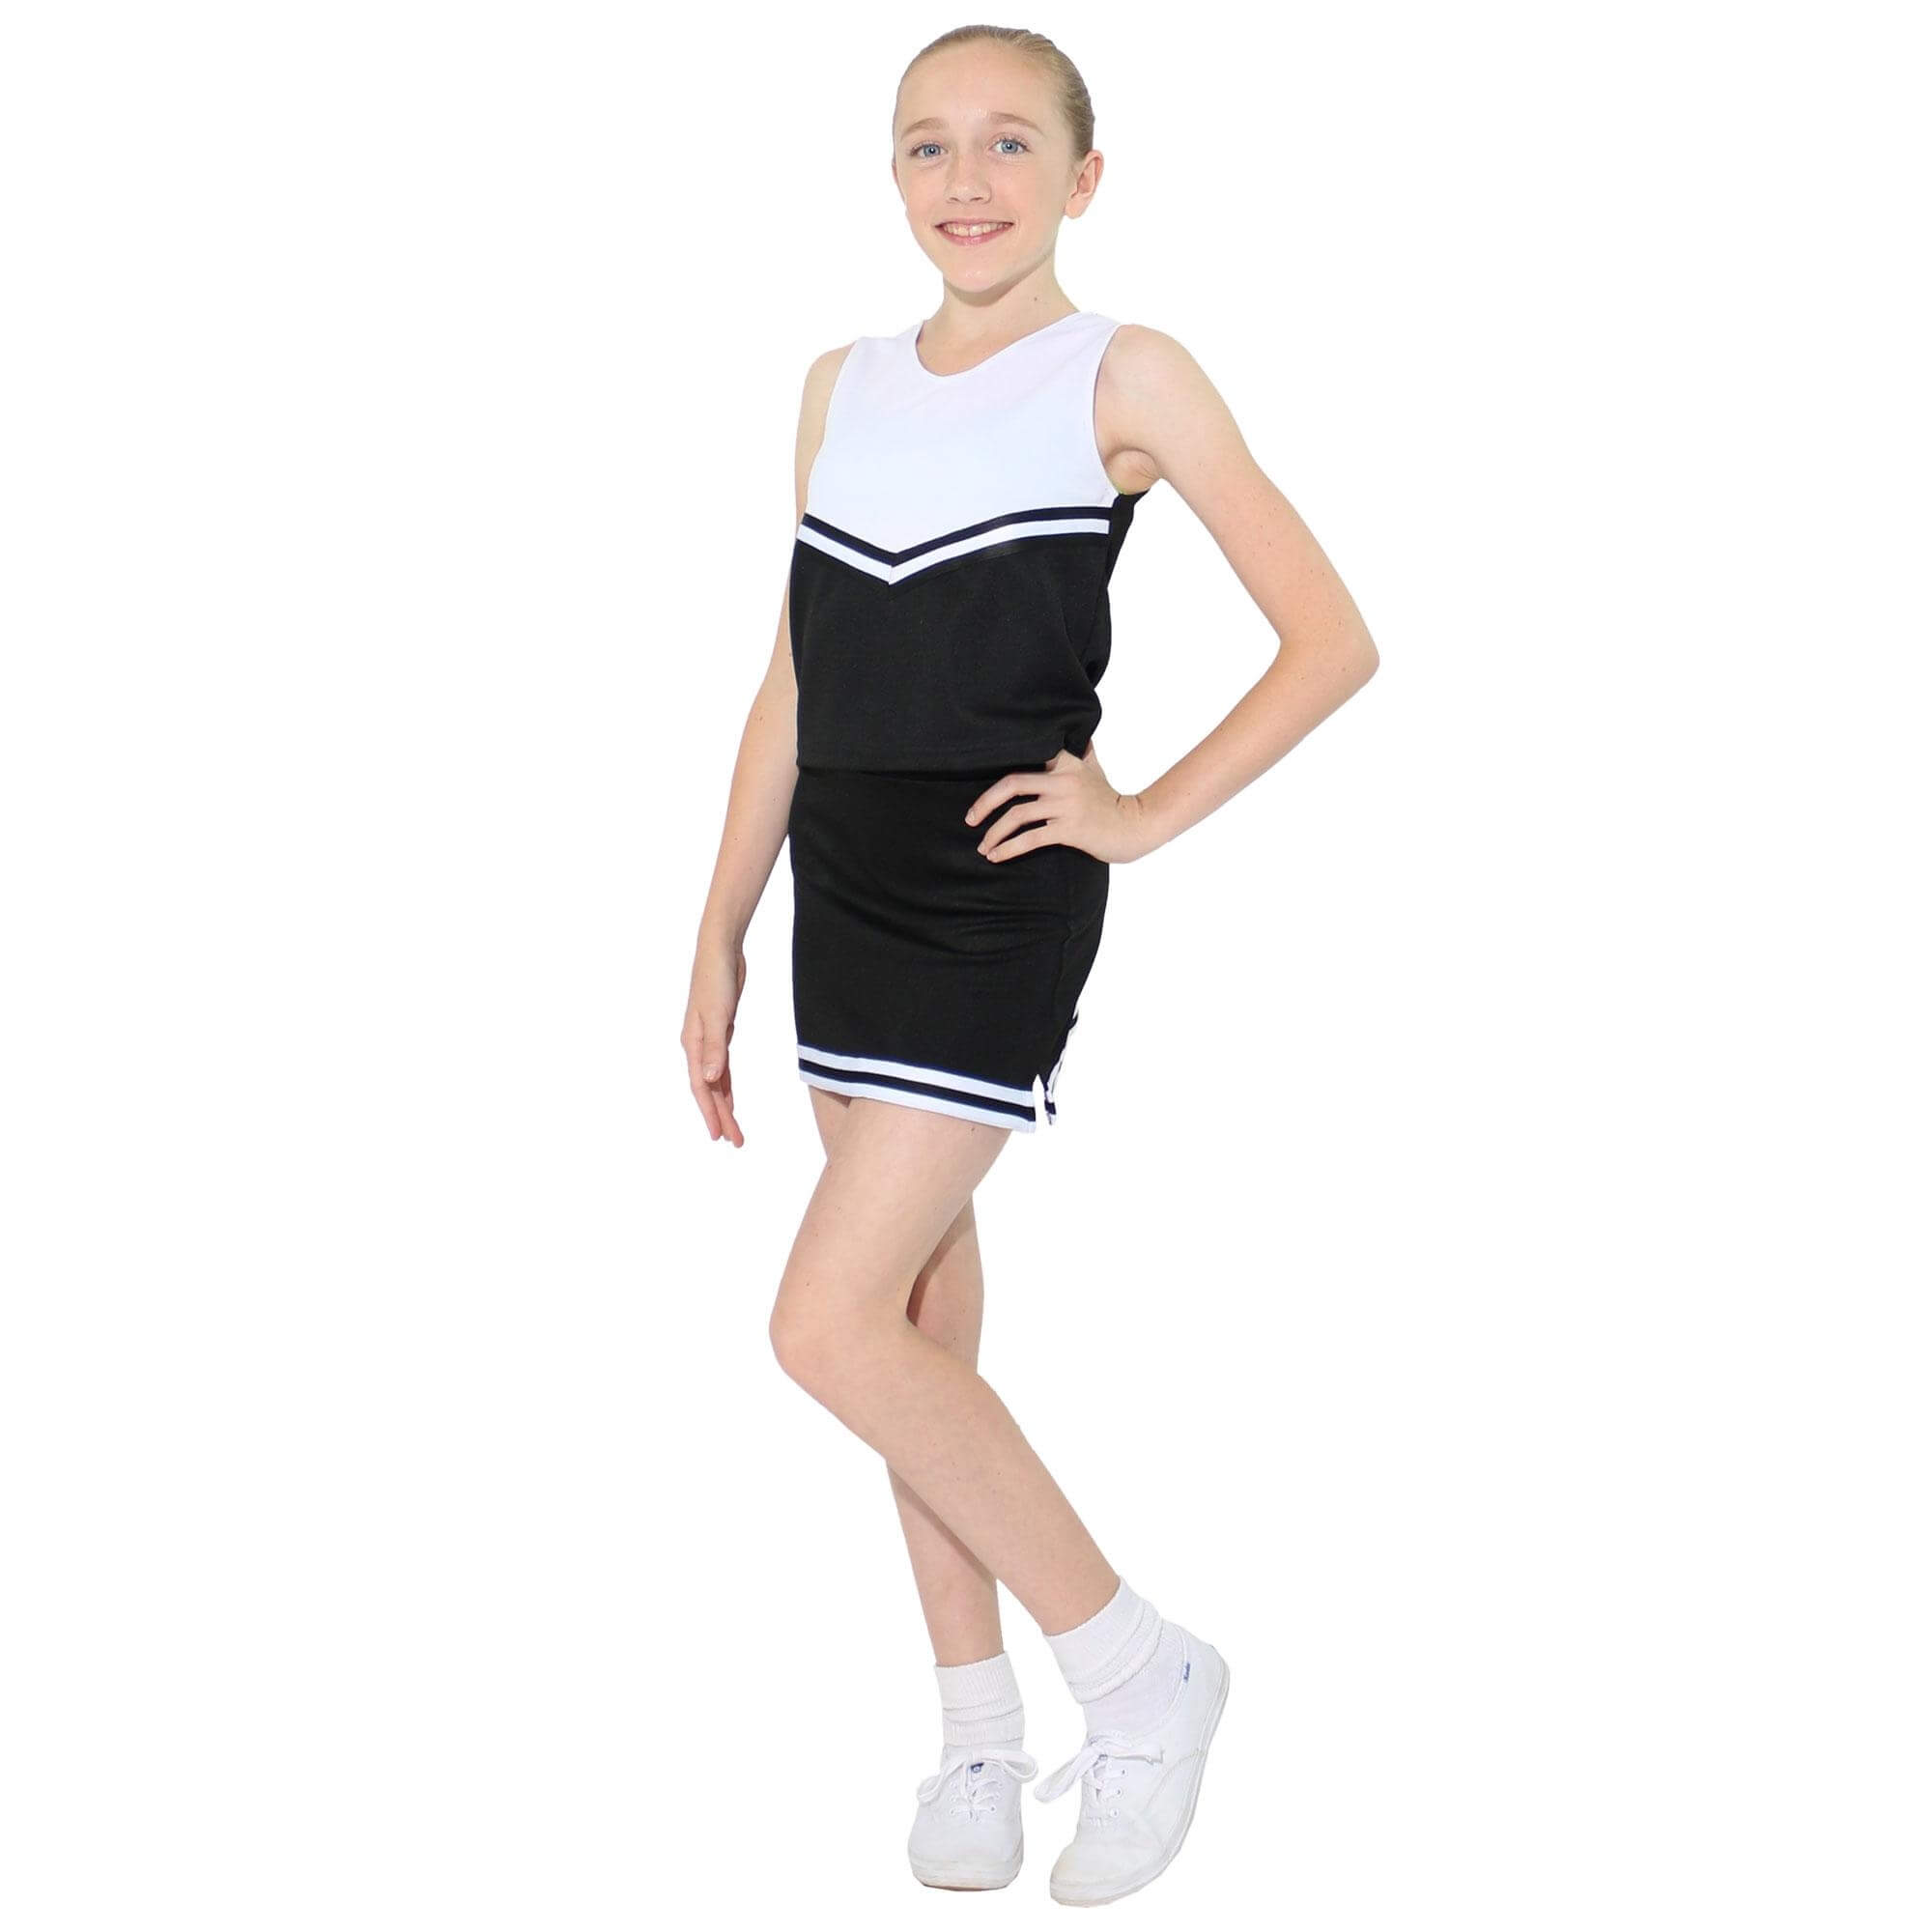 Danzcue Child V-Neck Cheerleaders Uniform Shell Top - Click Image to Close